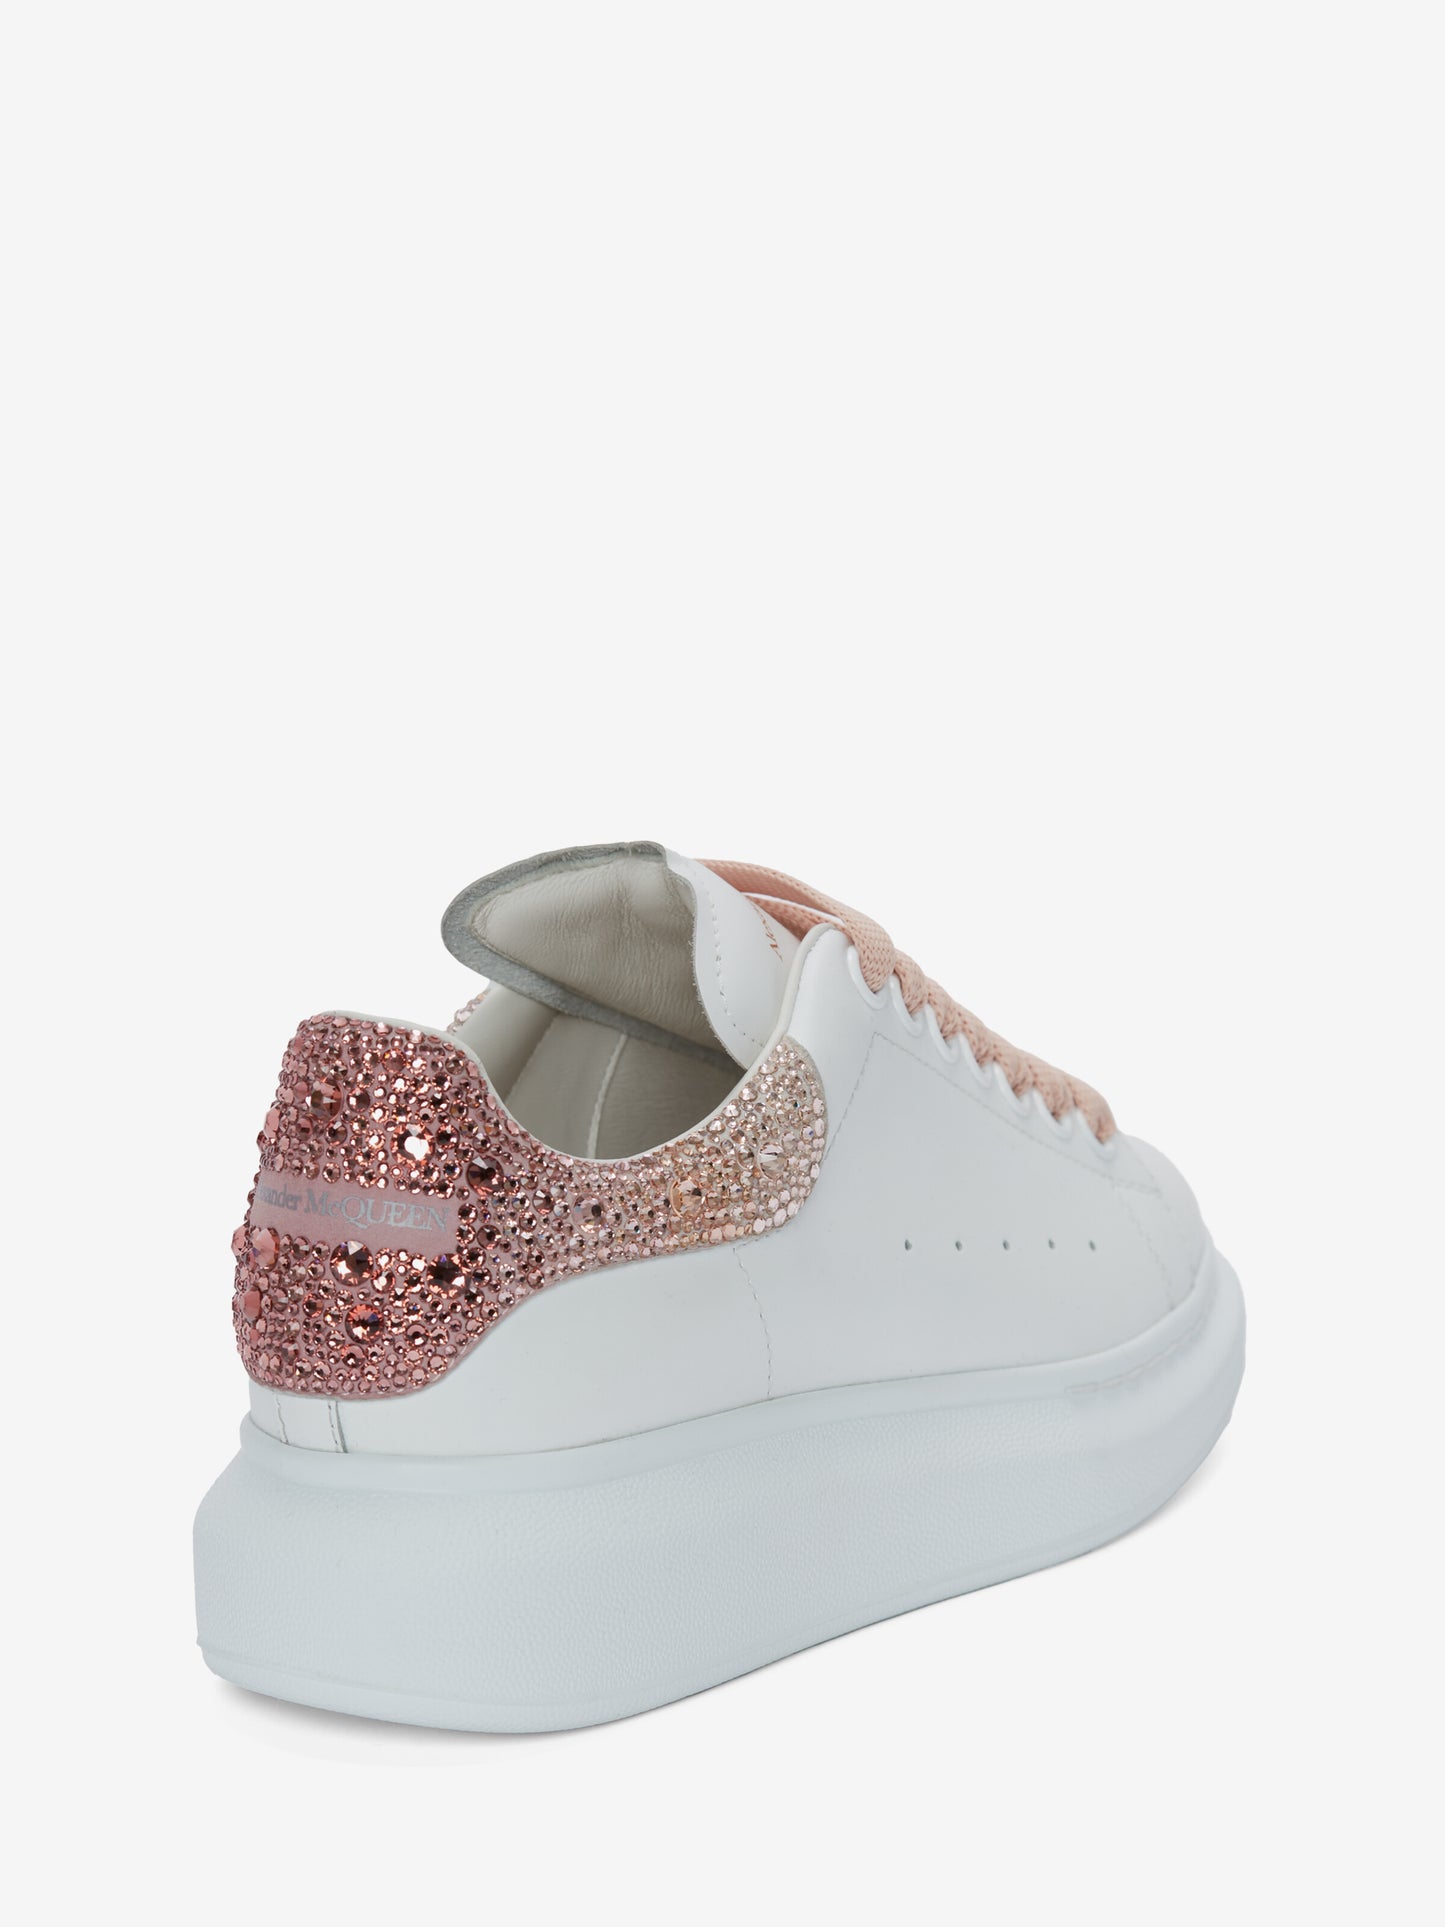 ALEXANDER McQUEEN - Sneaker Oversize in Bianco/rosa con cristalli dégradé - IperShopNY